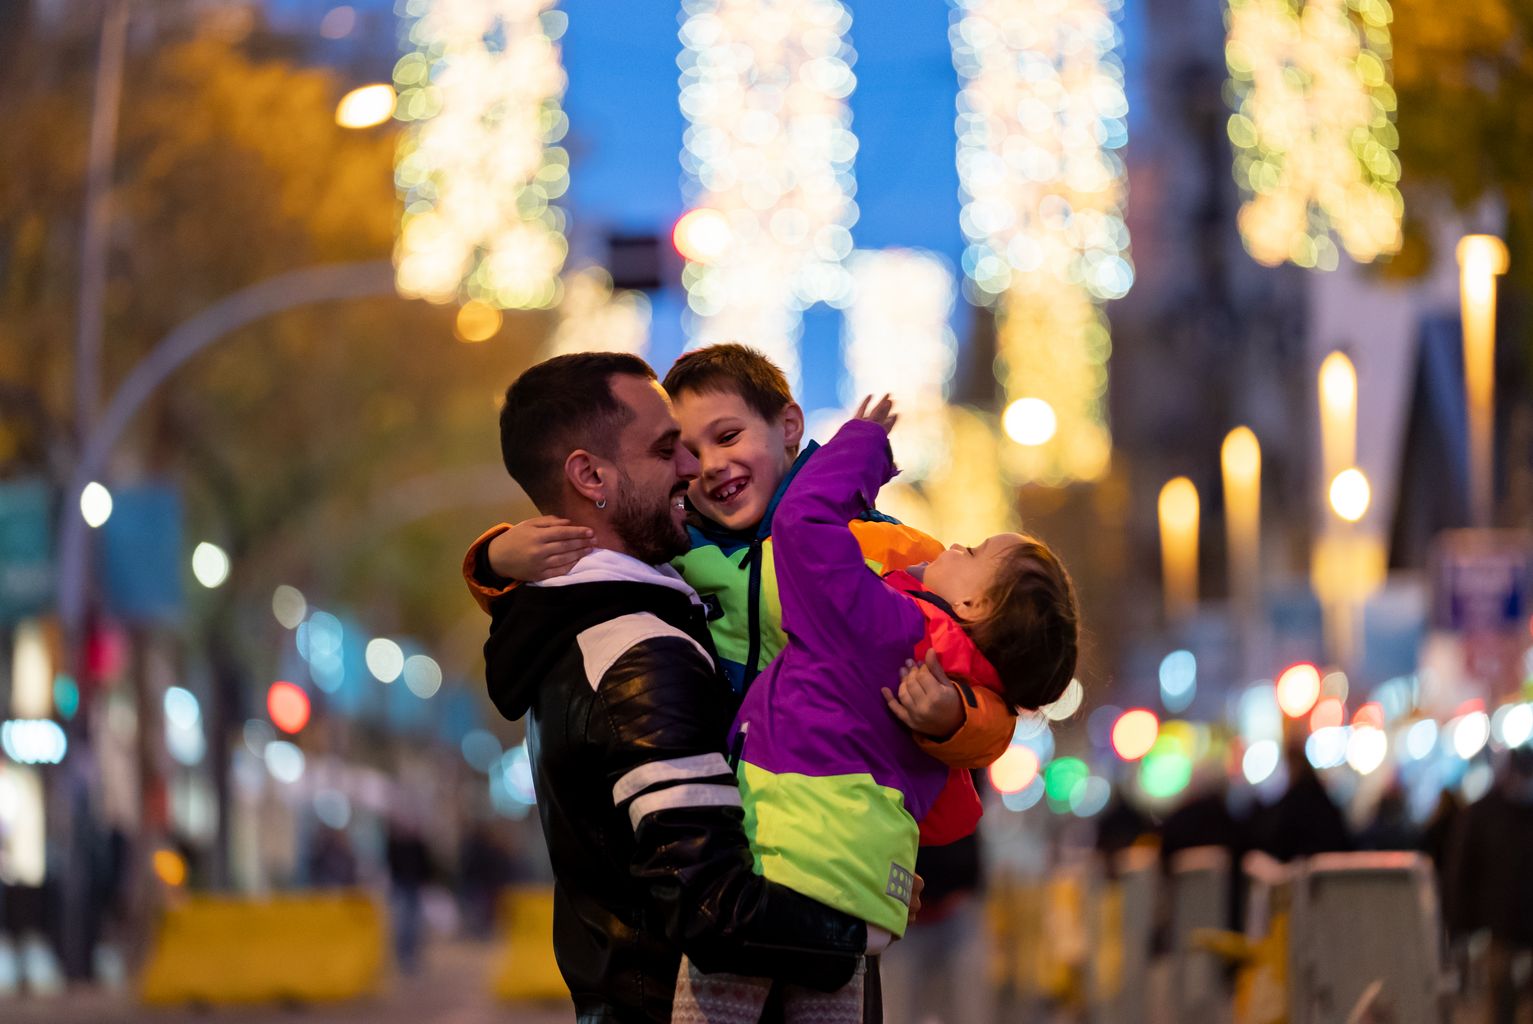 Familia en la calle Creu Coberta bajo las luces de Navidad